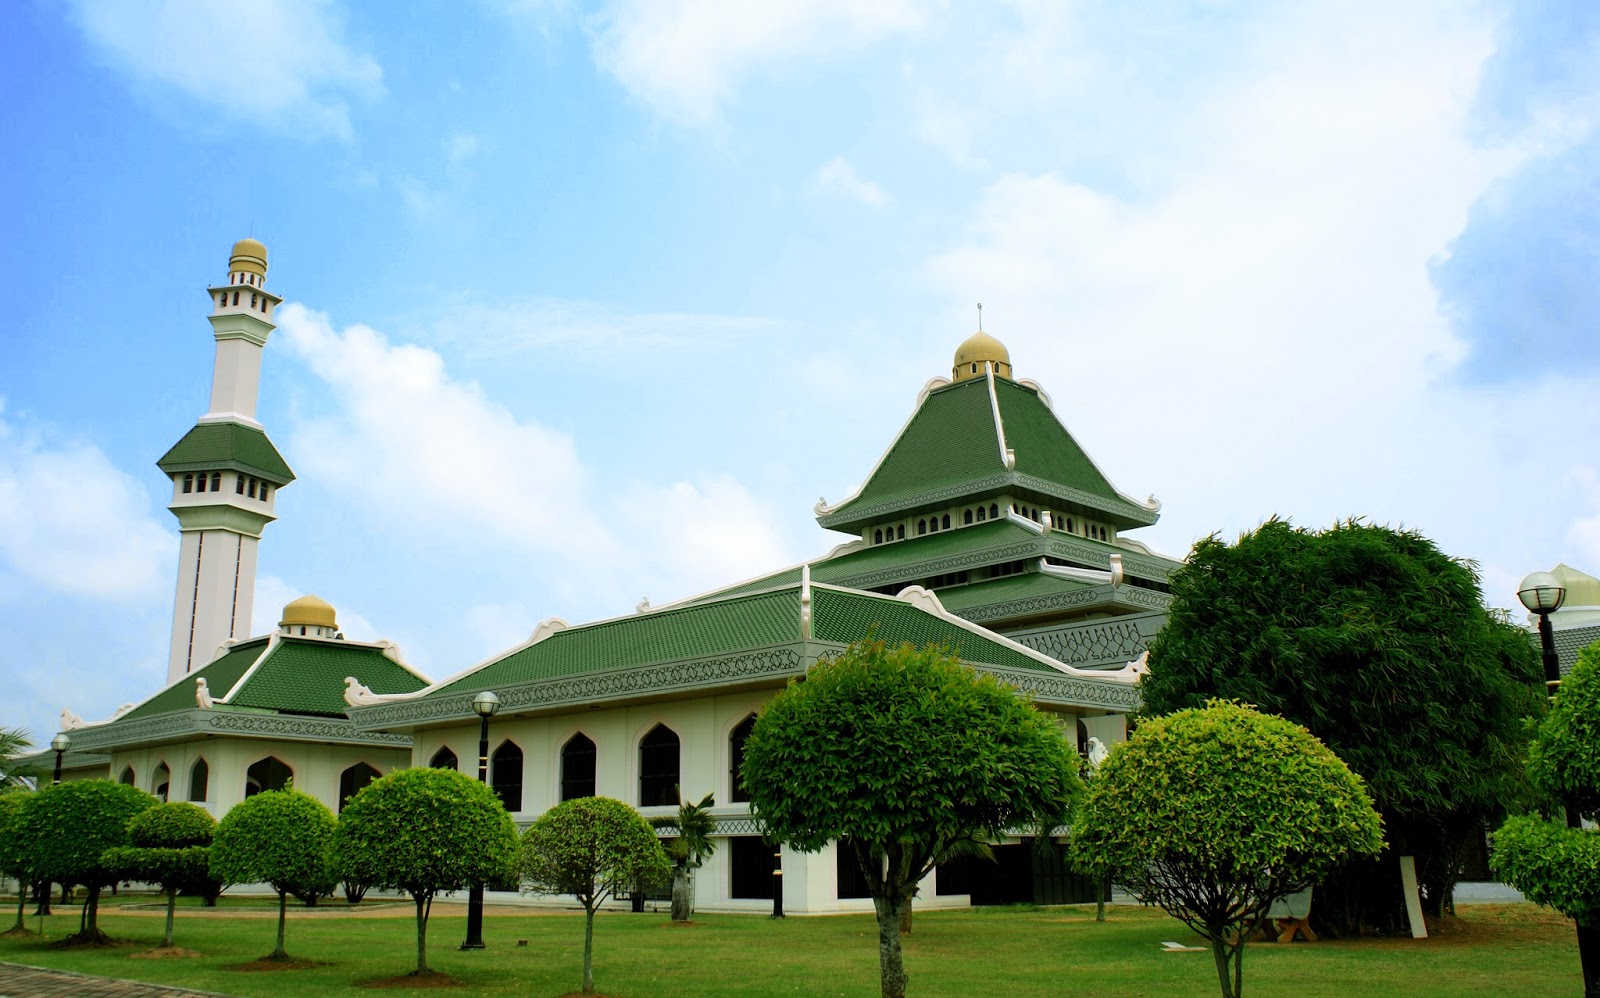 POTO Travel & Tours: Gambar Masjid Yang Indah di Malaysia!